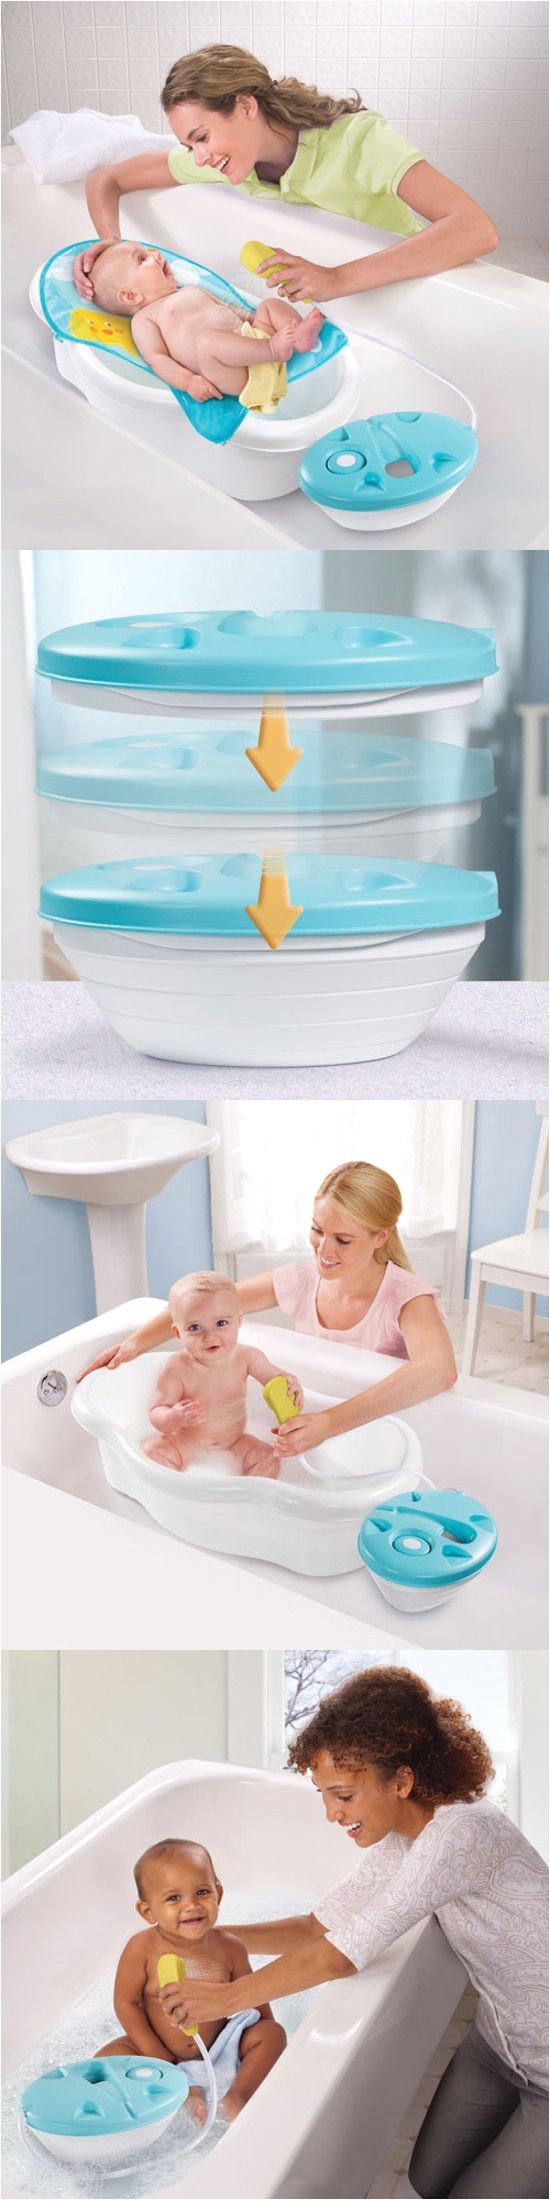 infant toddler baby bath shower tub portable seat boy girl newborn grow stages bath tubs 113814 pinterest shower tub infant toddler and infant